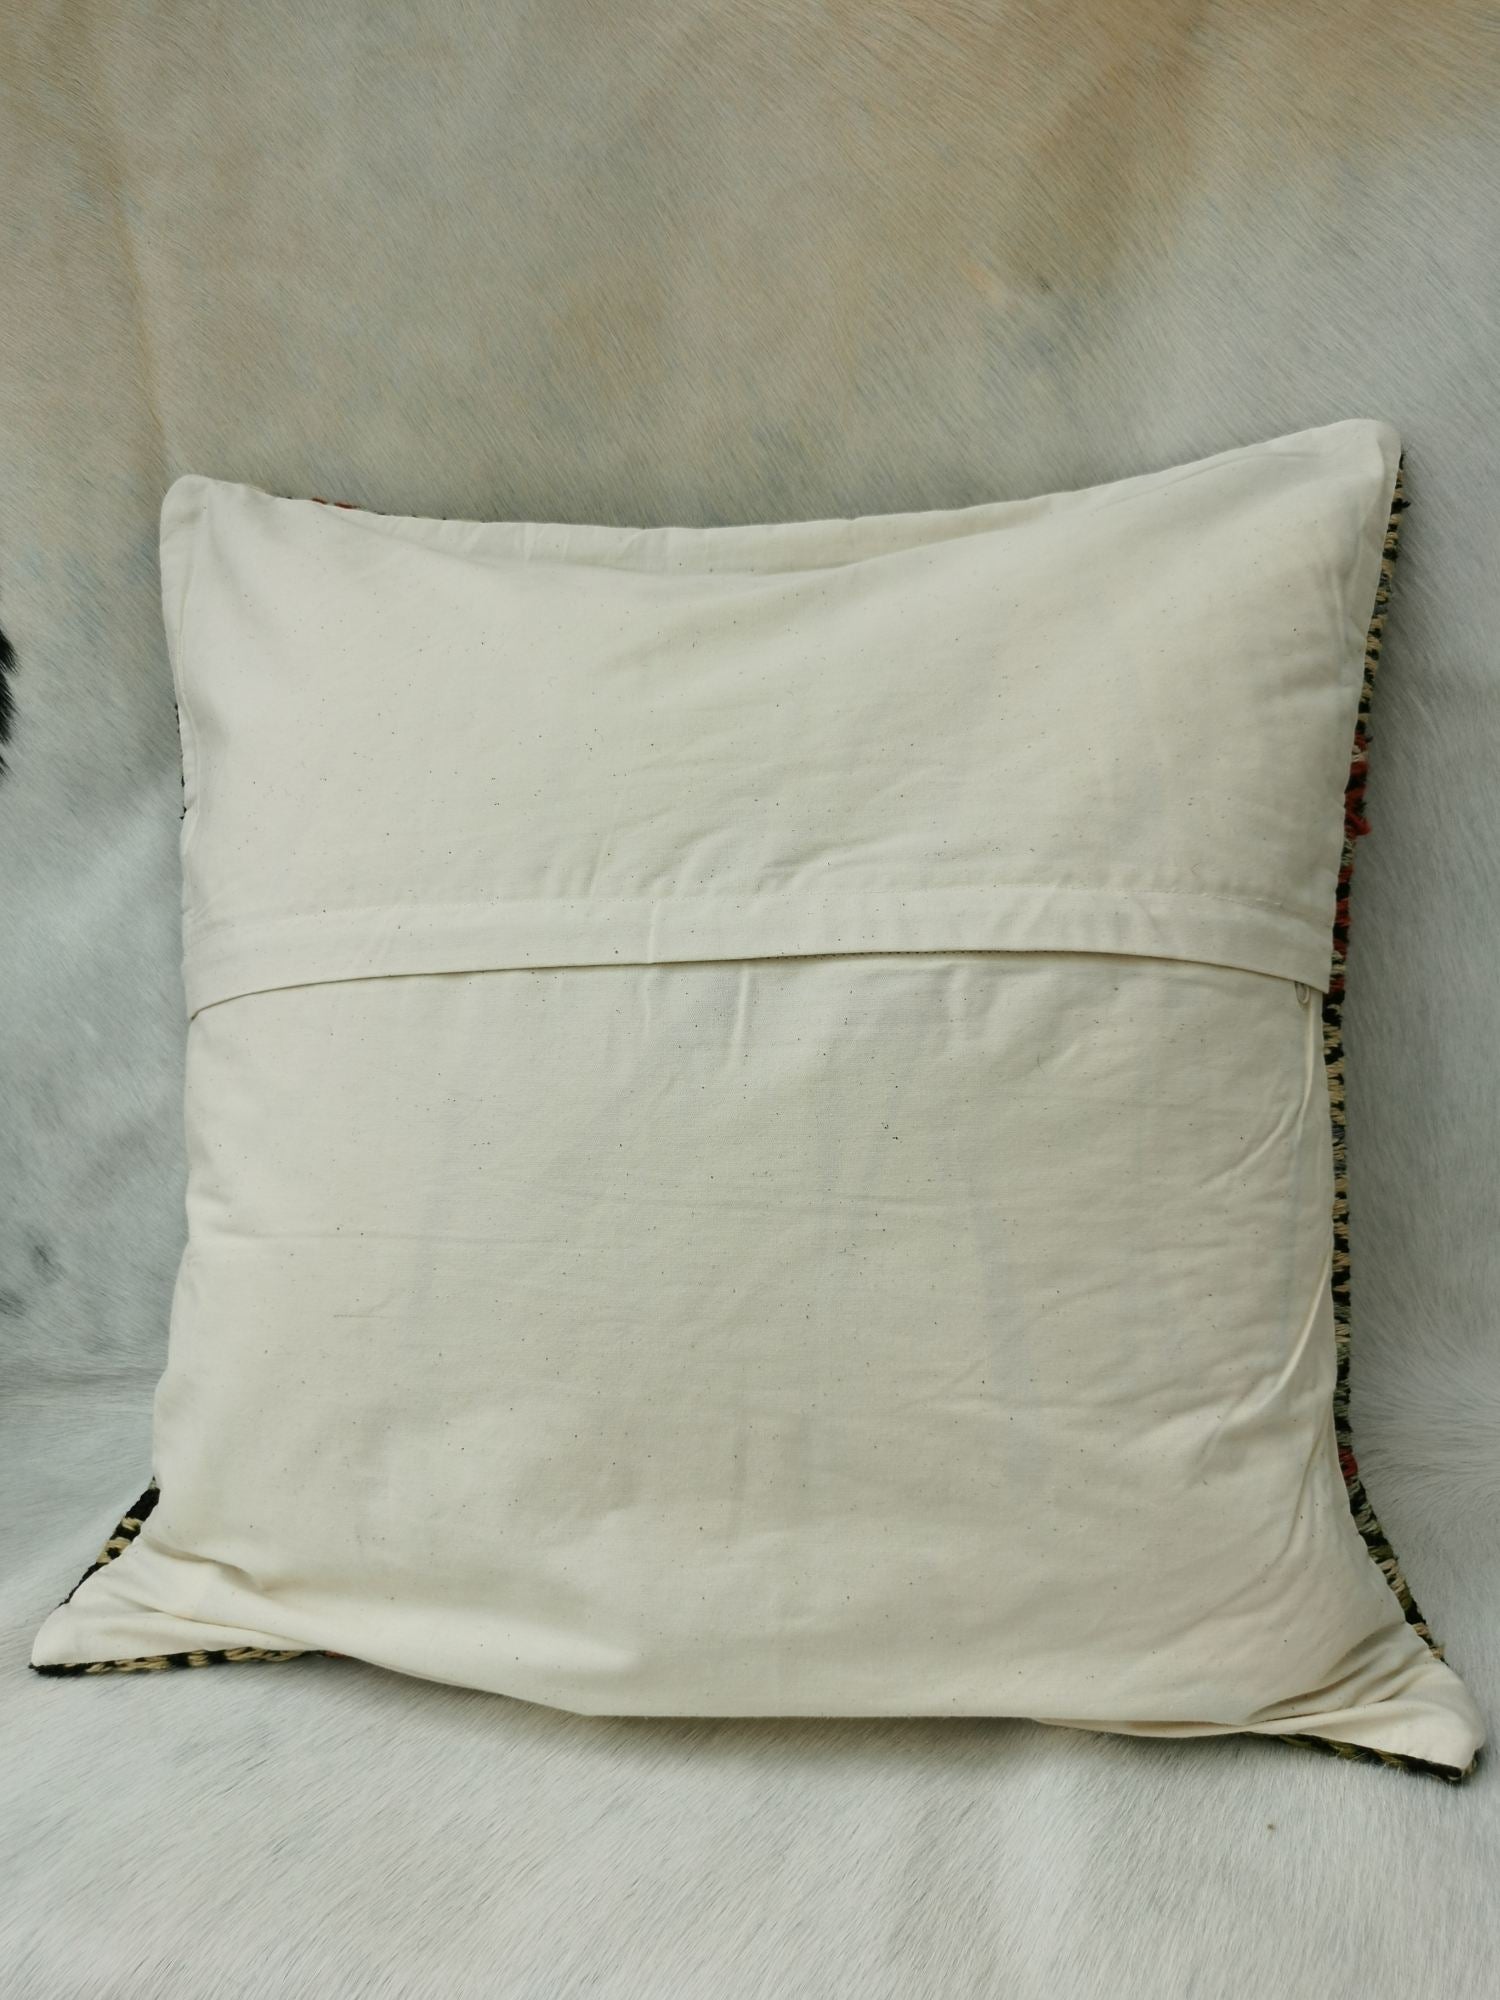 Kilim Pillow, Kilim Pillow Cover, unique Pillow Case, vintage Kilim Pillow, Kilim Cushion, Throwpillow, pillow case, boho pillow, eclectic, arabic design